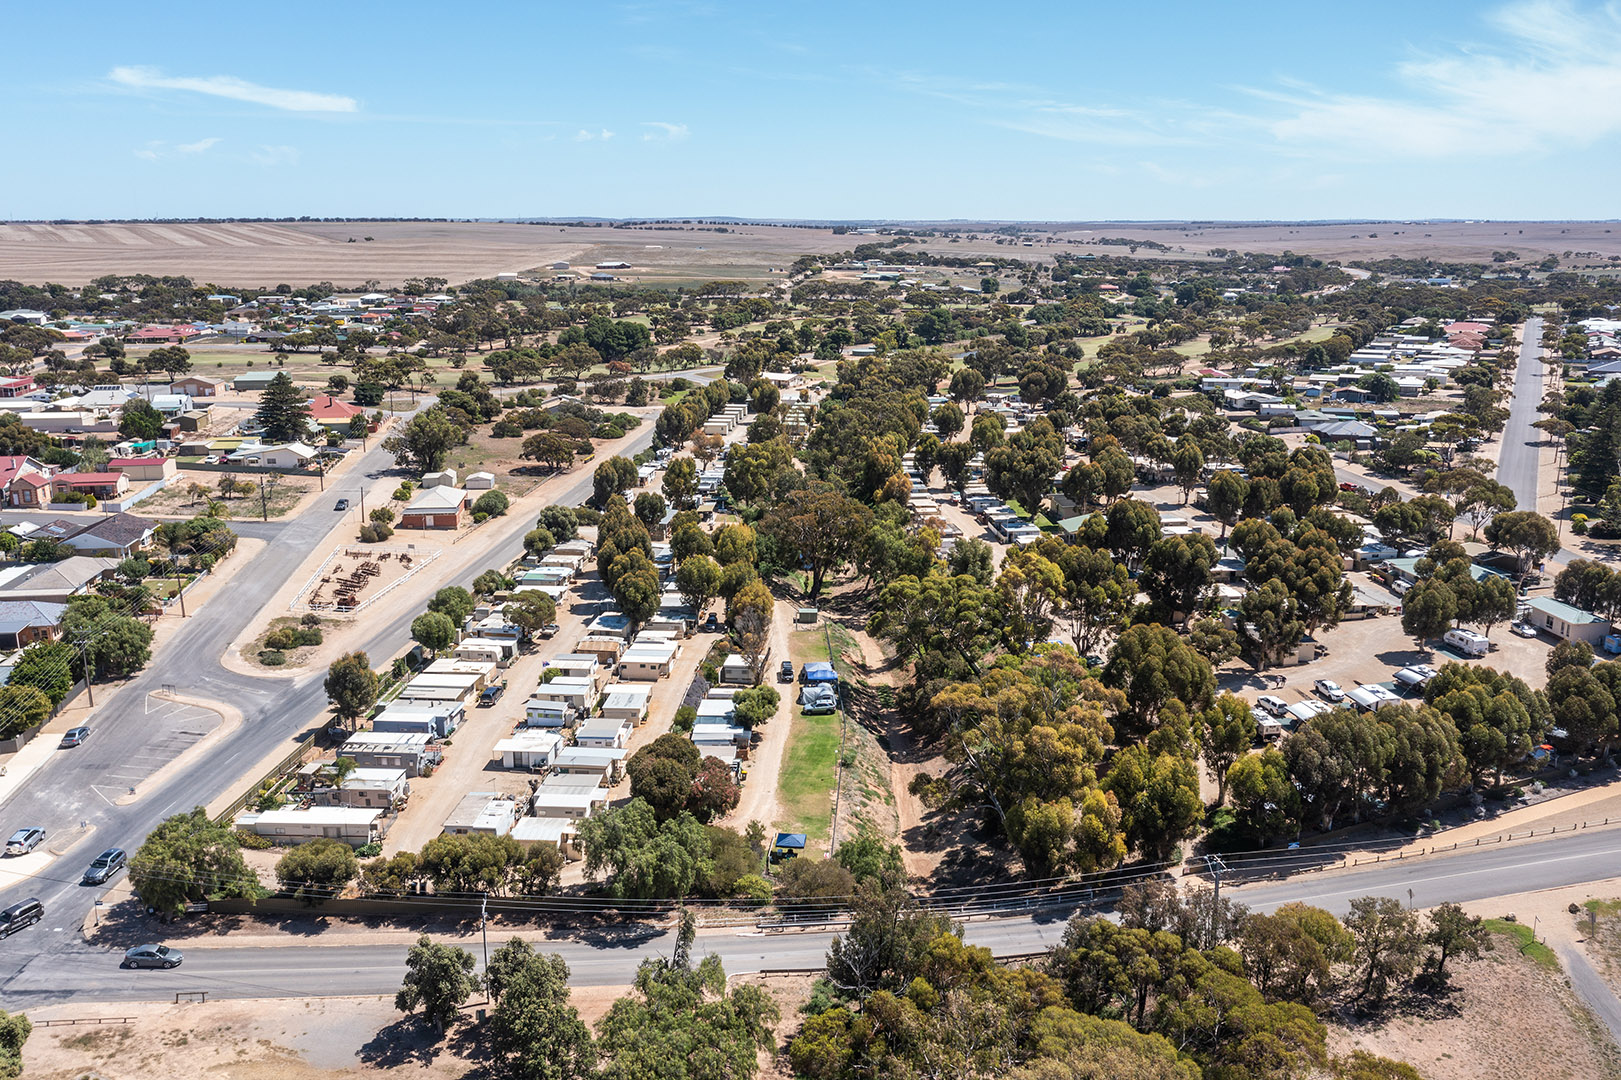 Drone photo of caravan park